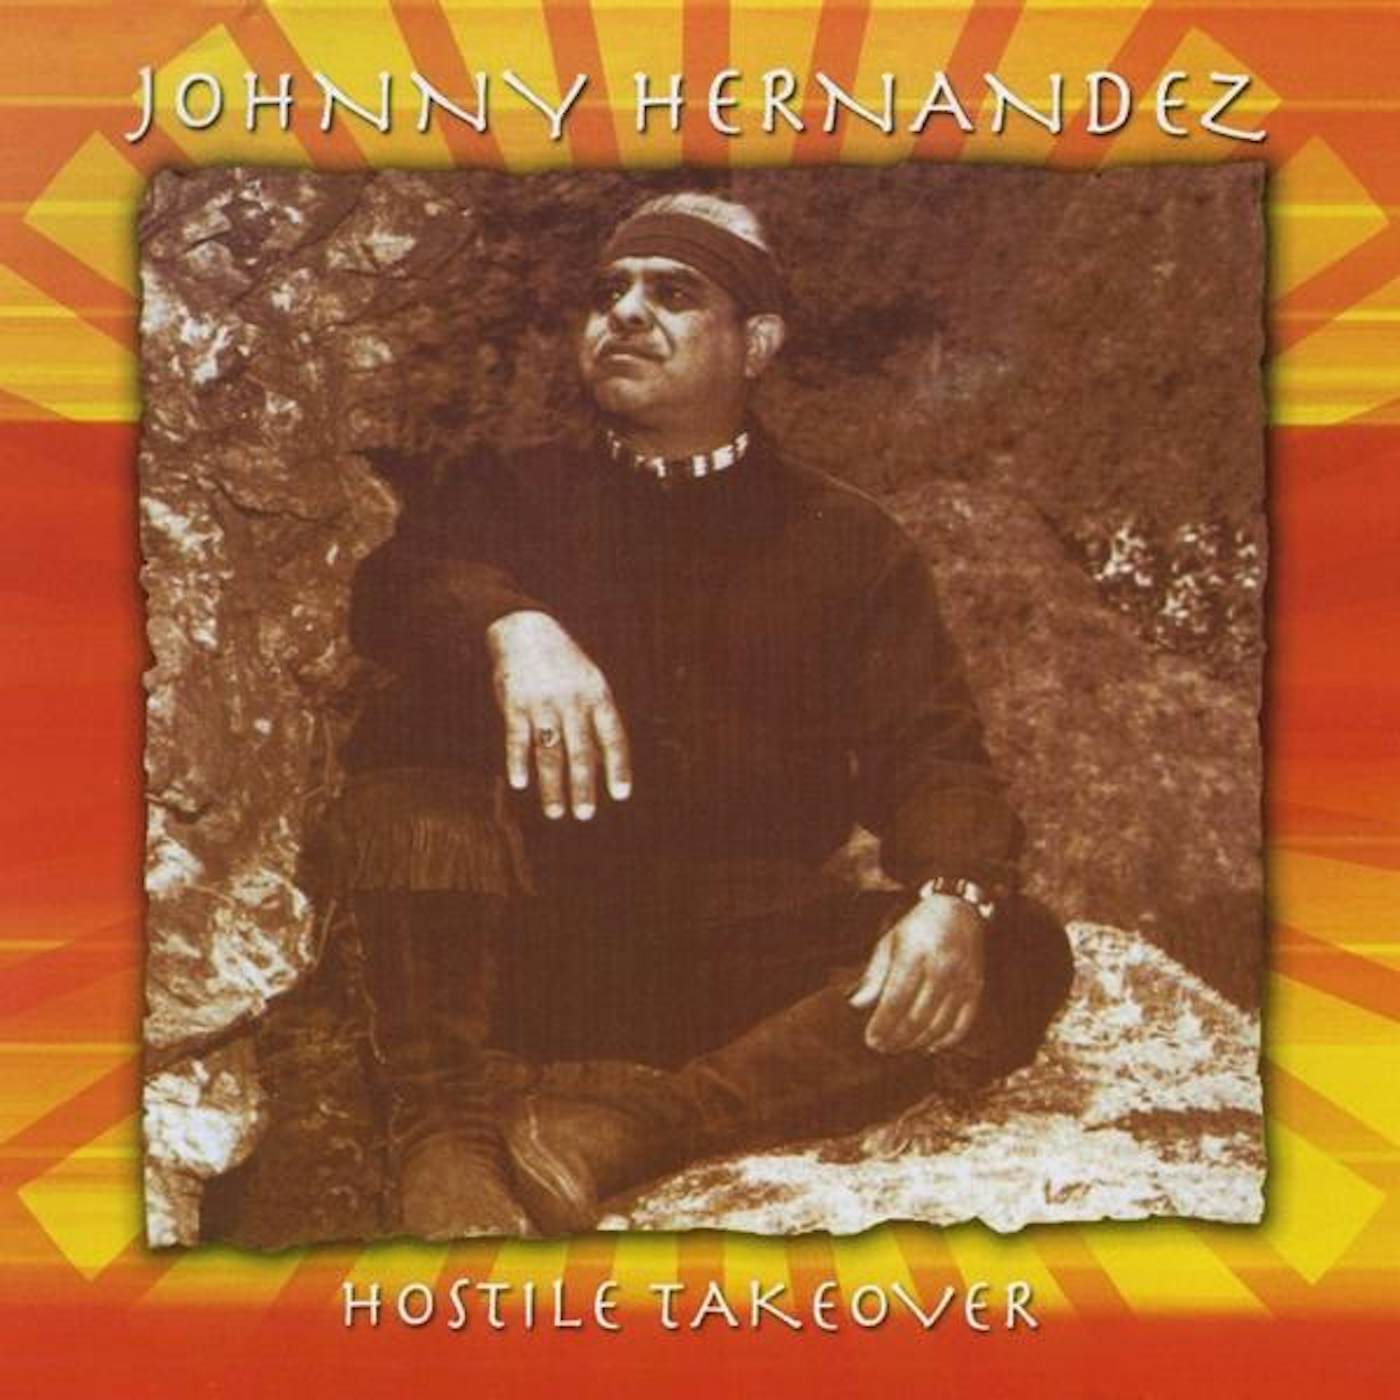 Johnny Hernandez HOSTILE TAKE OVER CD